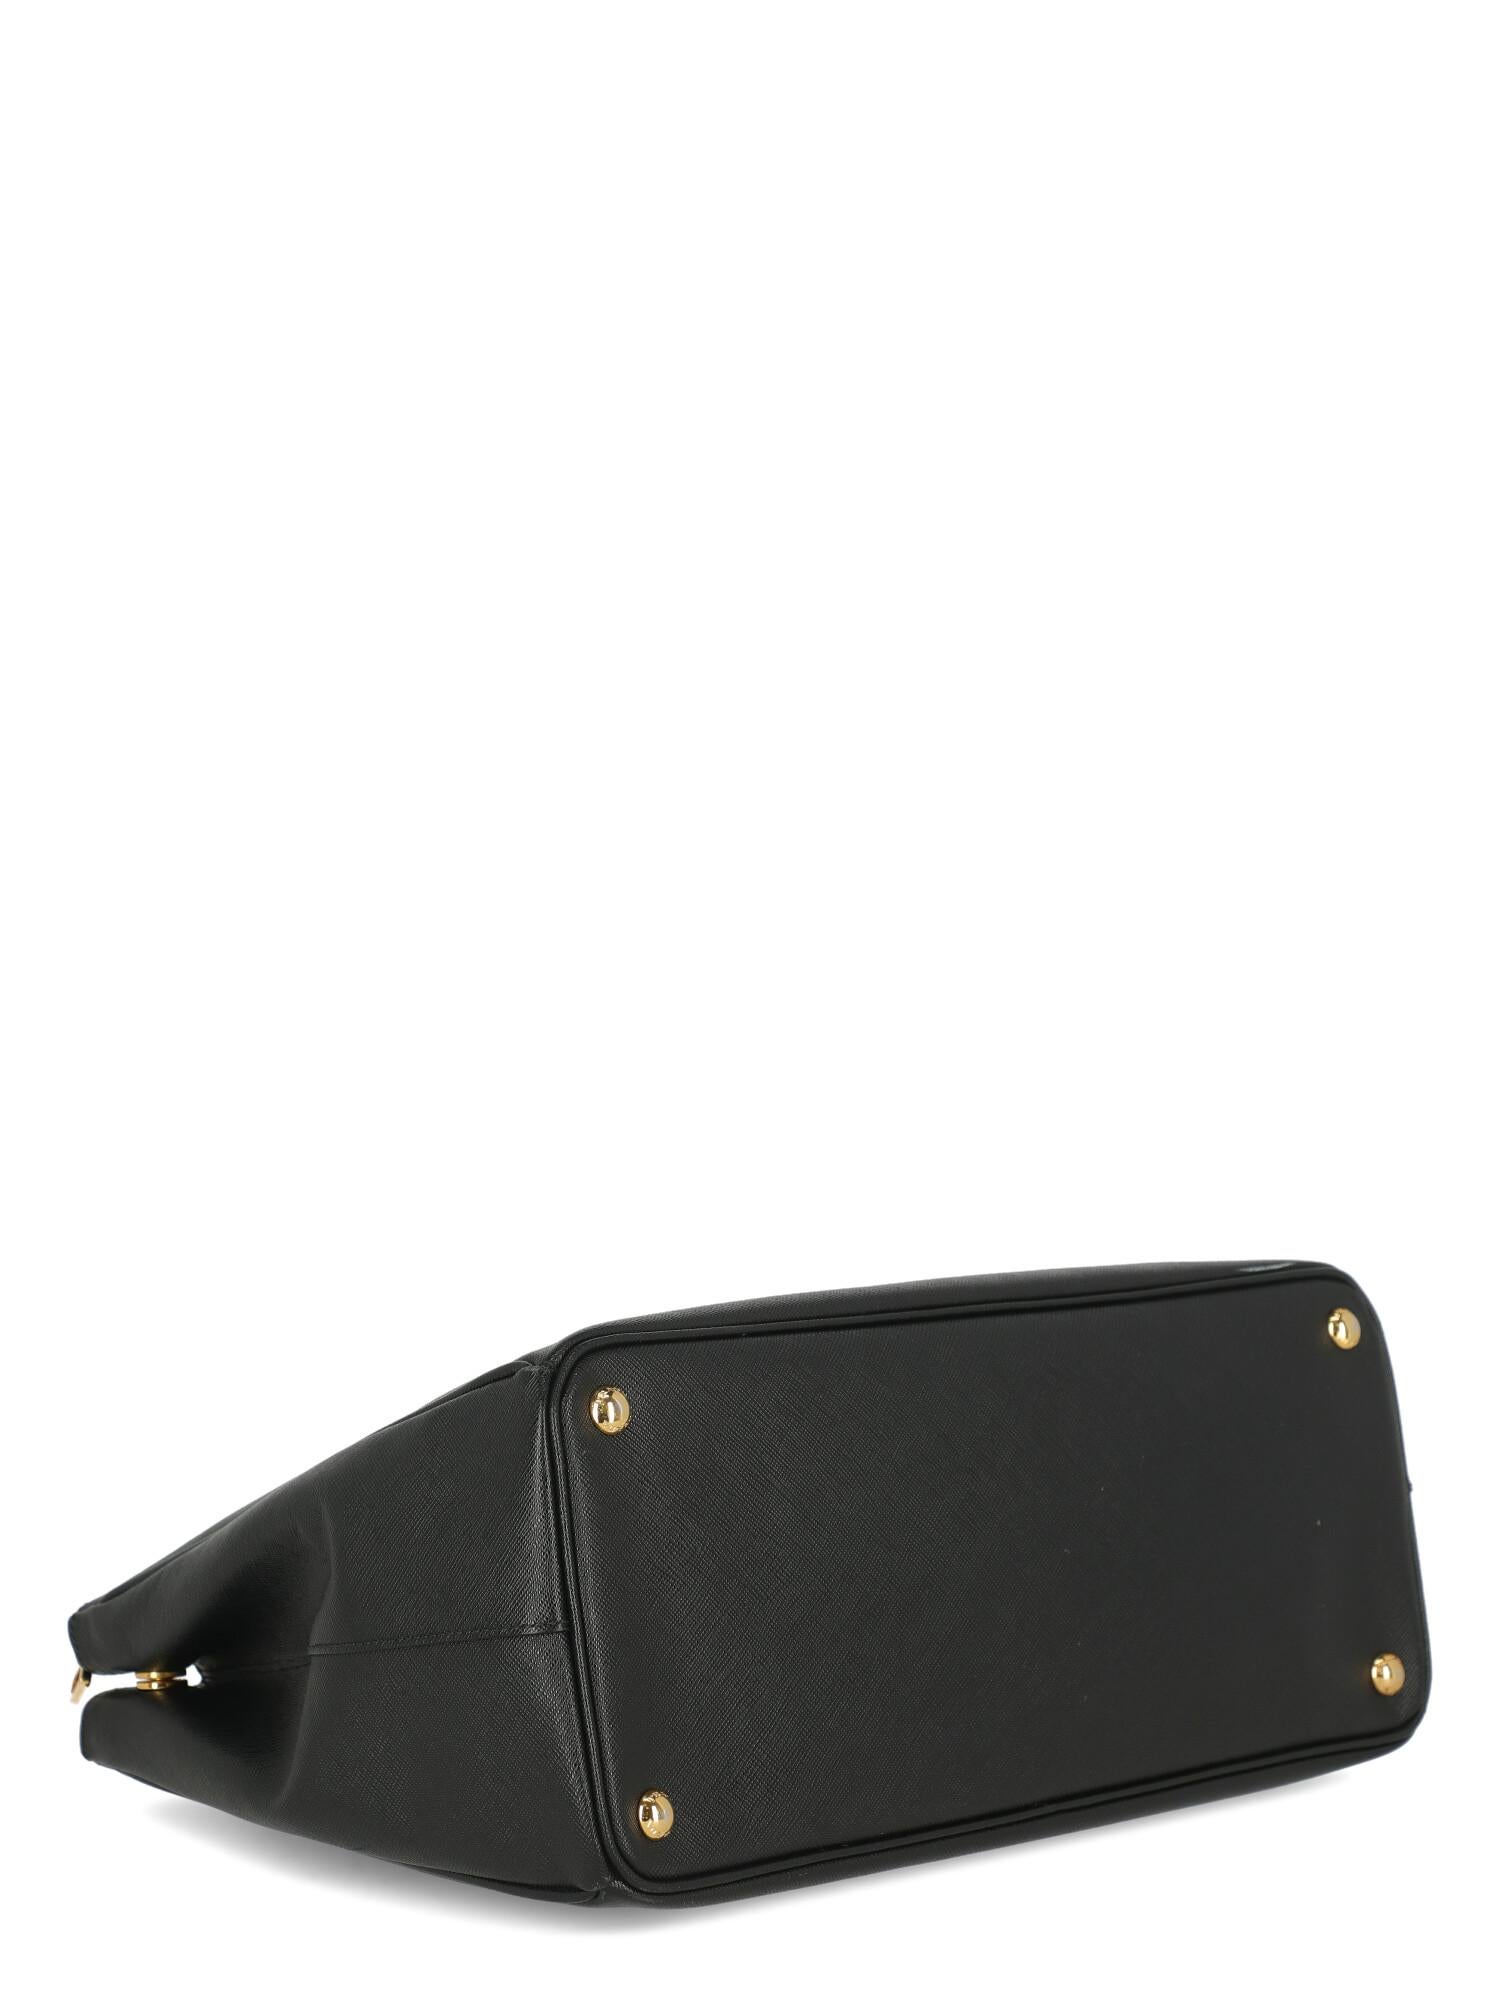 Prada Women  Handbags Galleria Black Leather For Sale 1